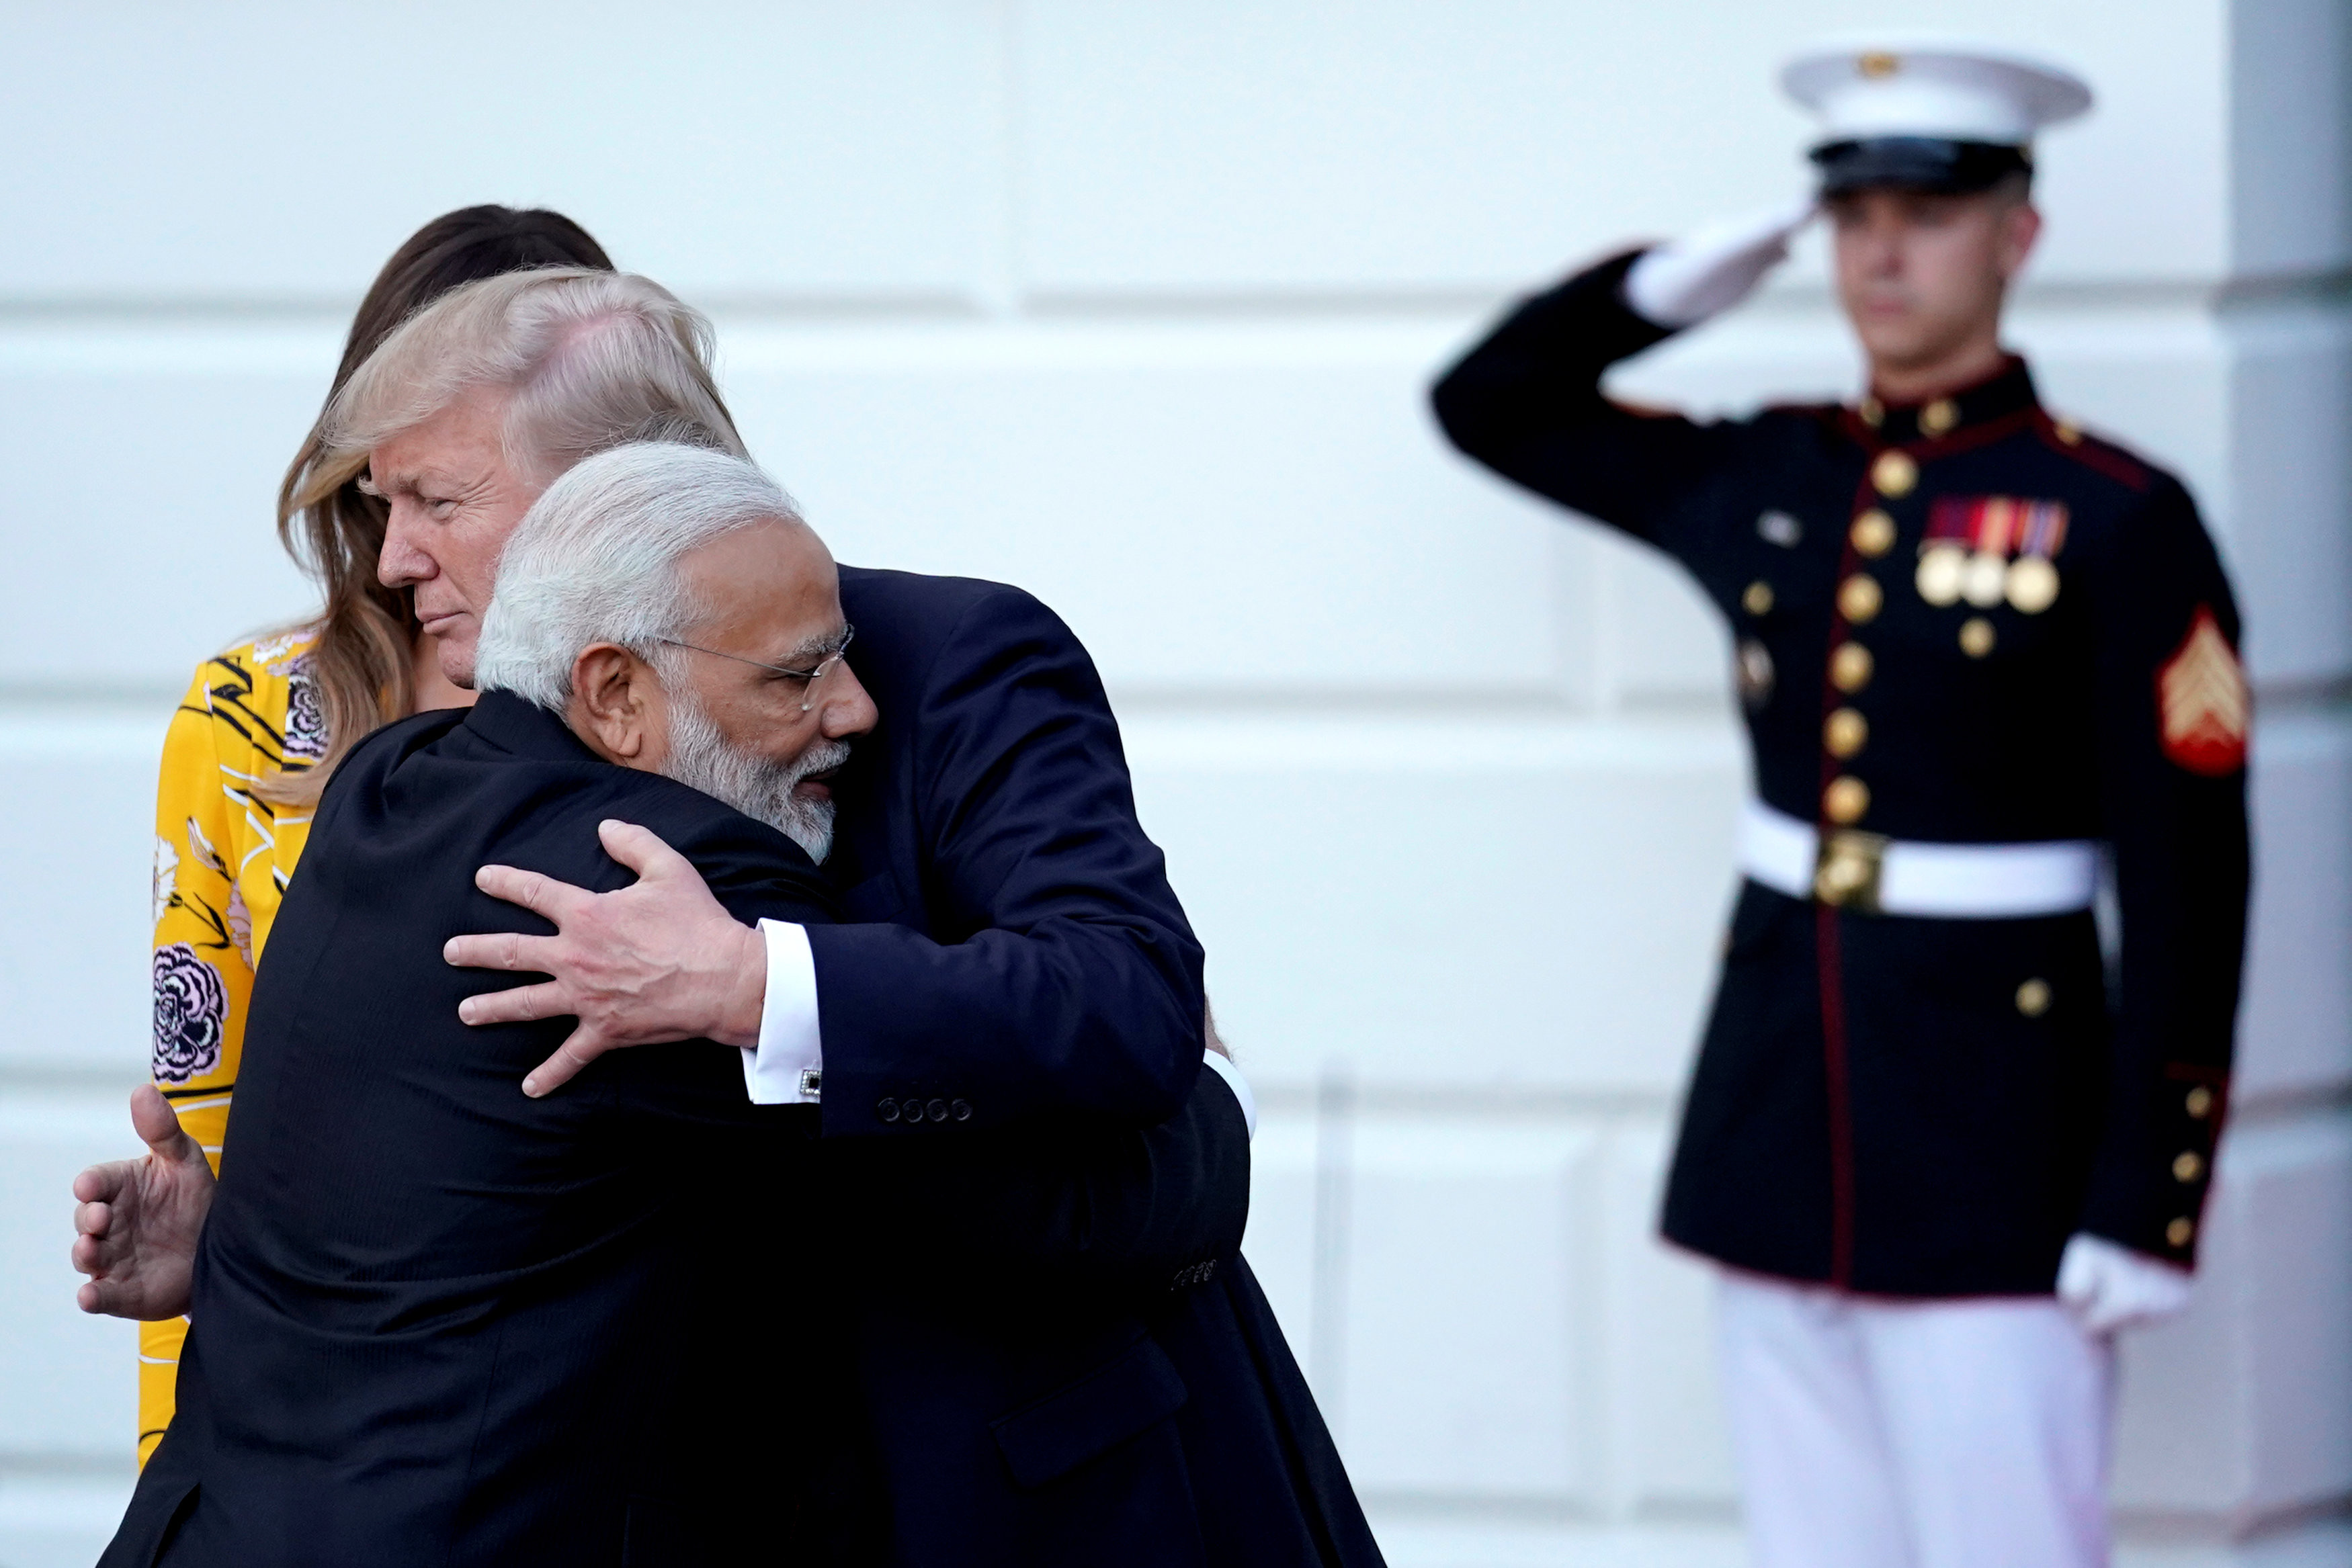 Нарендра Моди и Дональд Трамп во время встречи в Вашингтоне.&nbsp;Фото: &copy;&nbsp;REUTERS/Carlos Barria